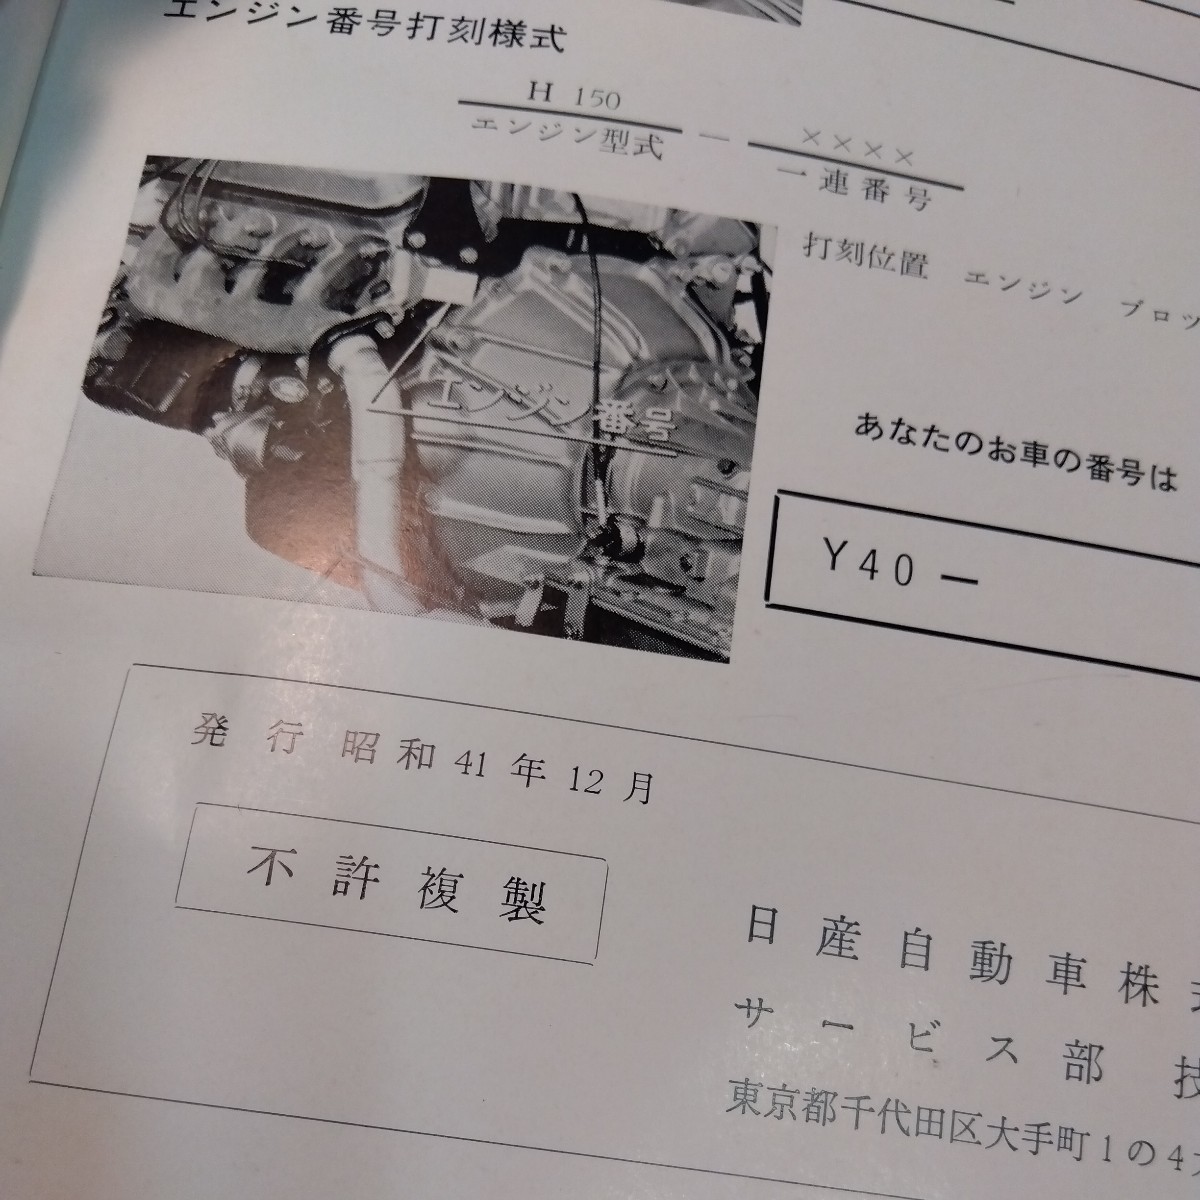  старый машина каталог Nissan Ниссан President H150 type инструкция по эксплуатации Showa 41 год 